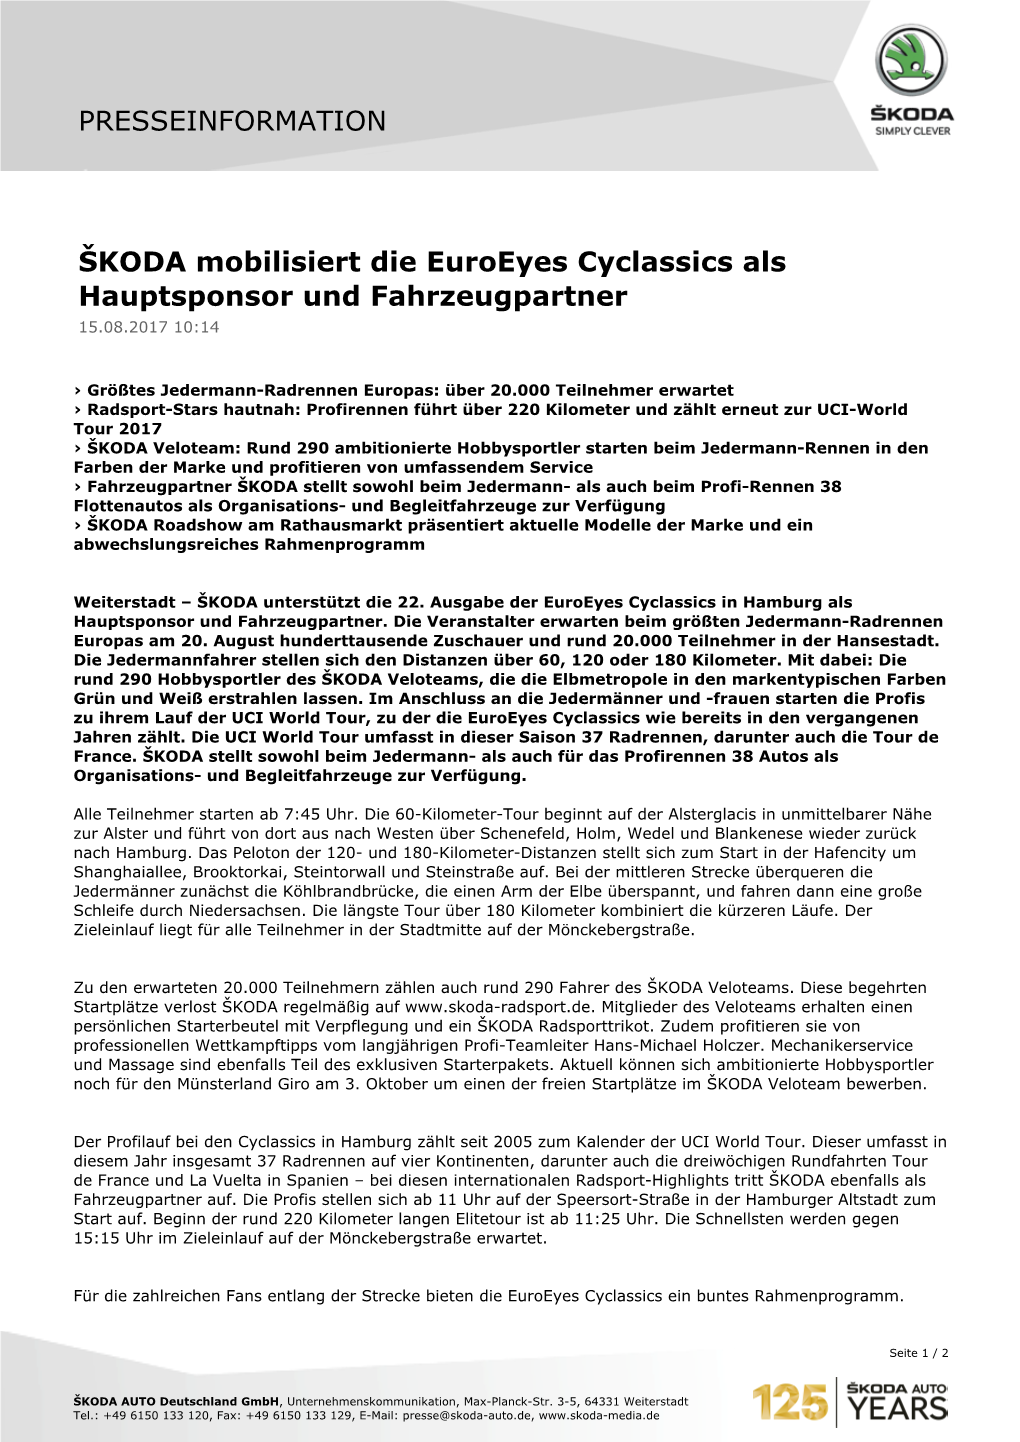 ŠKODA Mobilisiert Die Euroeyes Cyclassics Als Hauptsponsor Und Fahrzeugpartner 15.08.2017 10:14